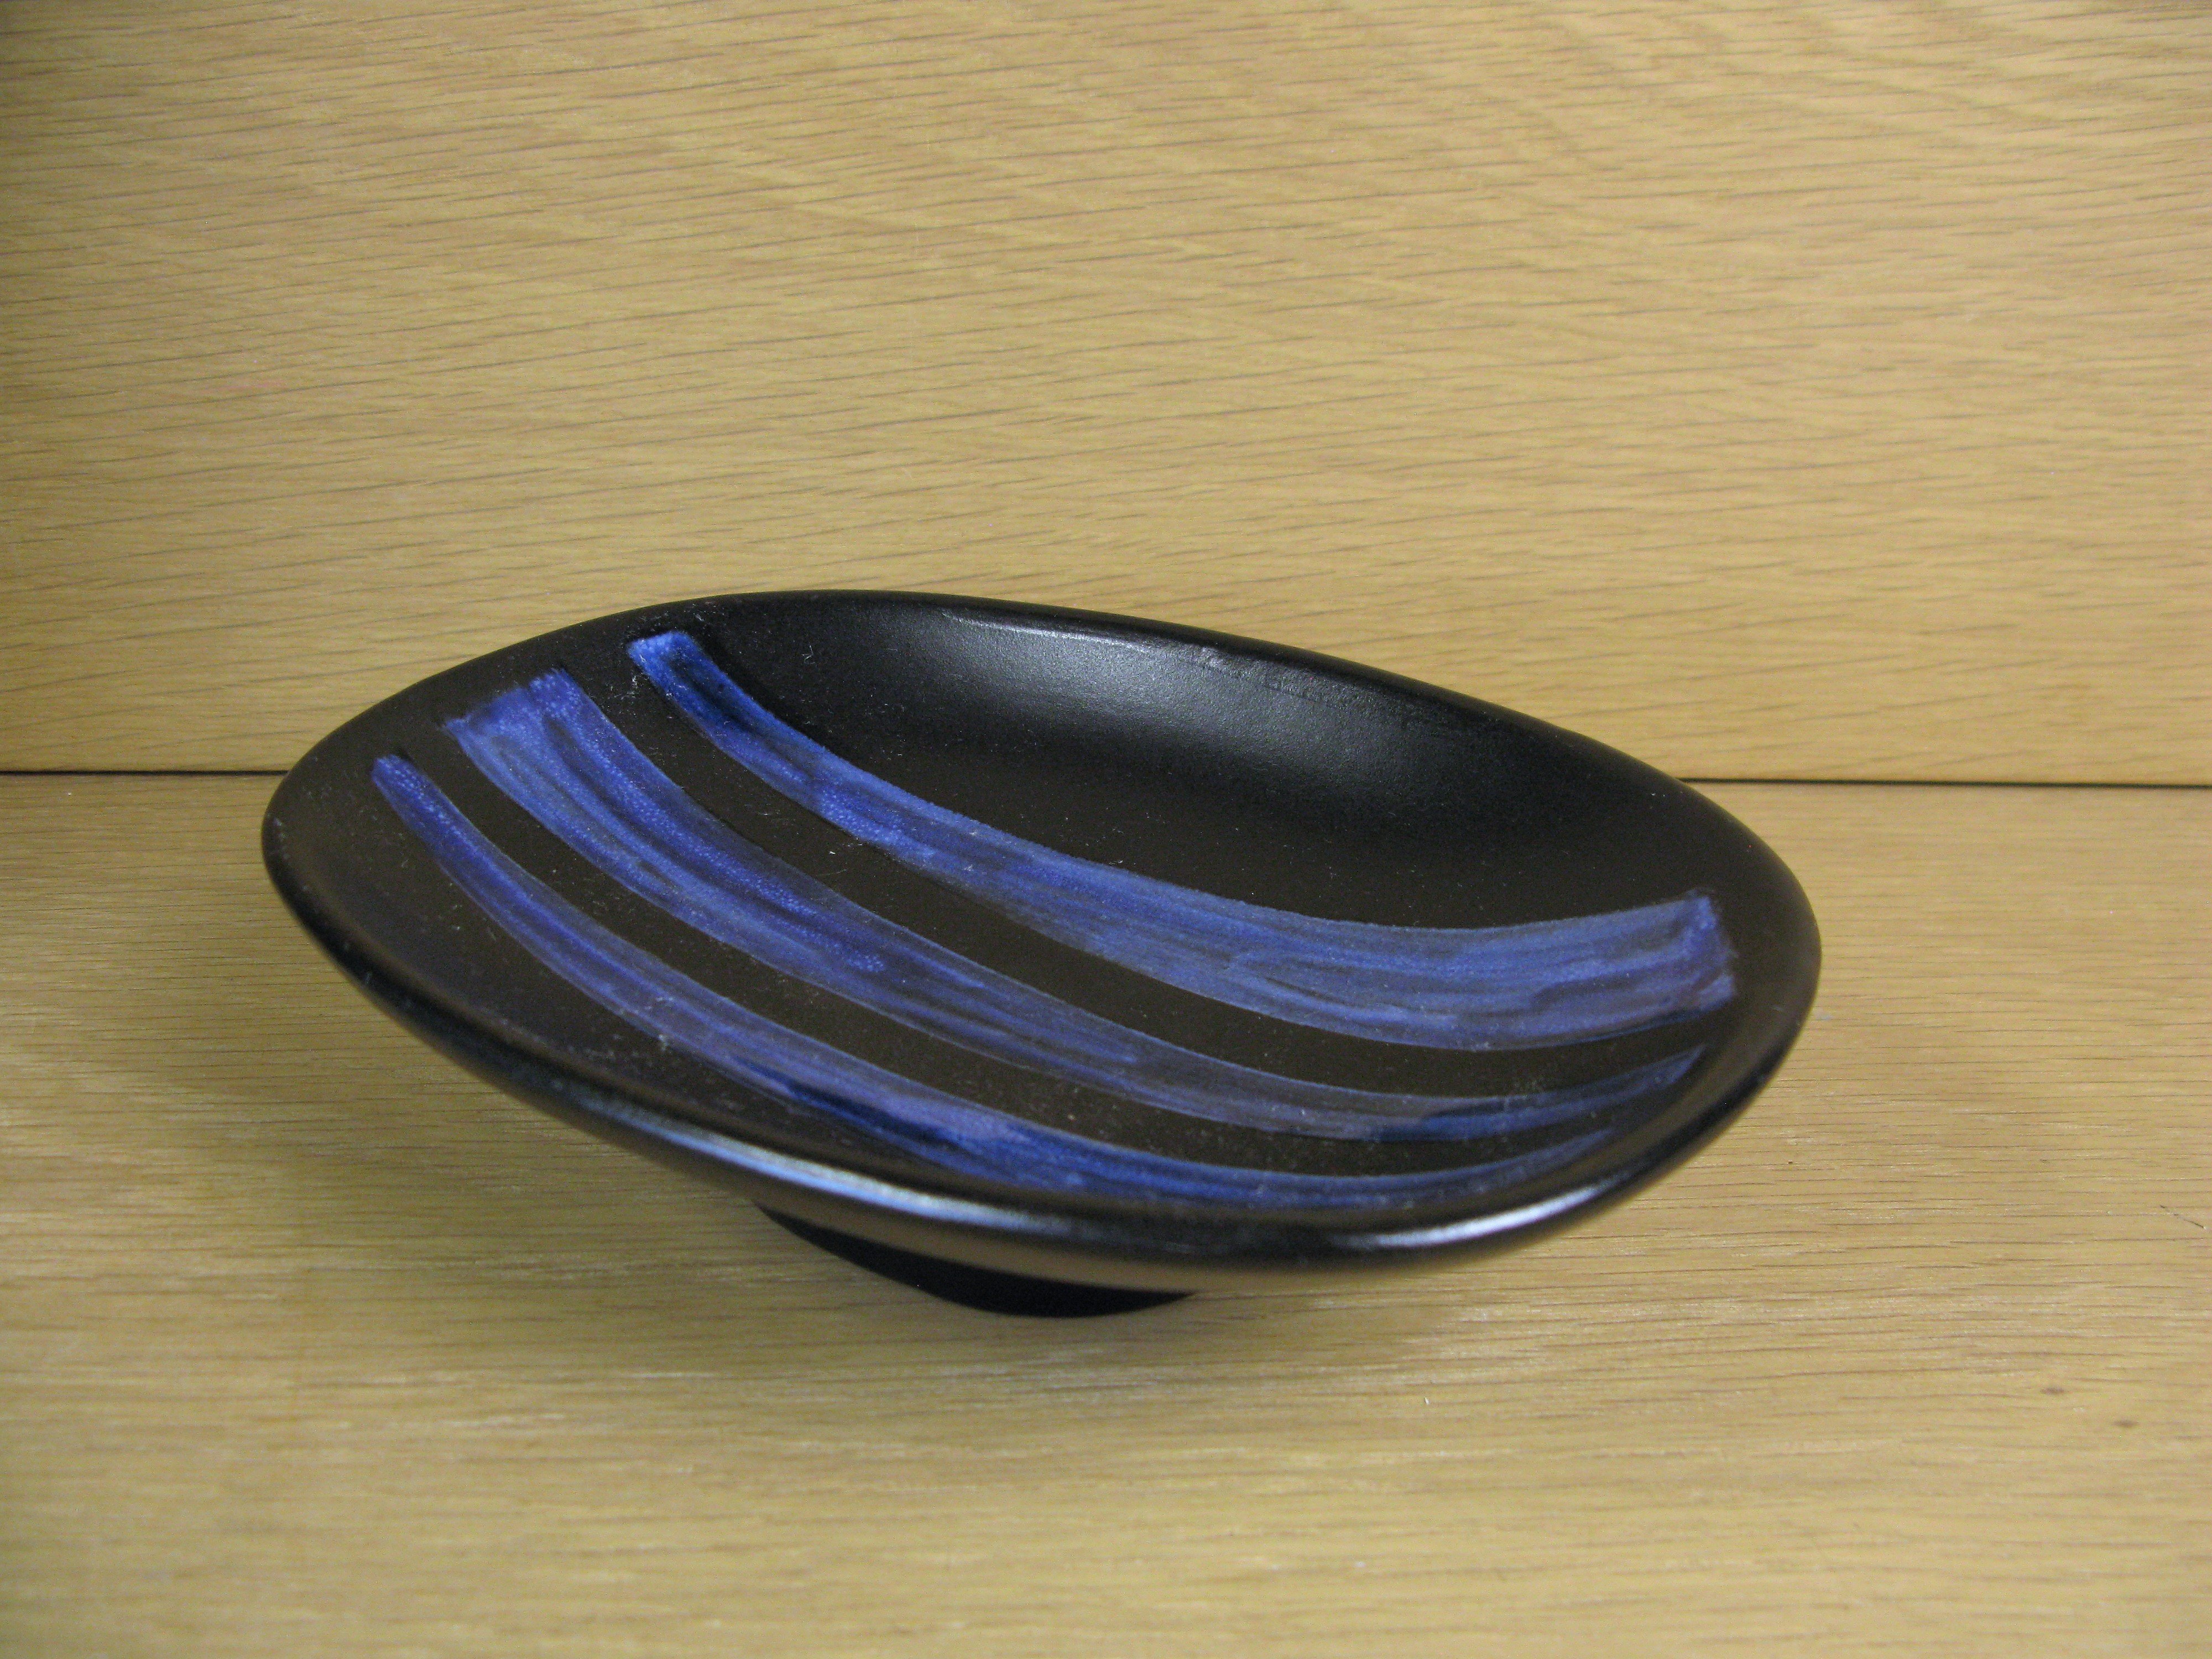 prisma bowl 7008